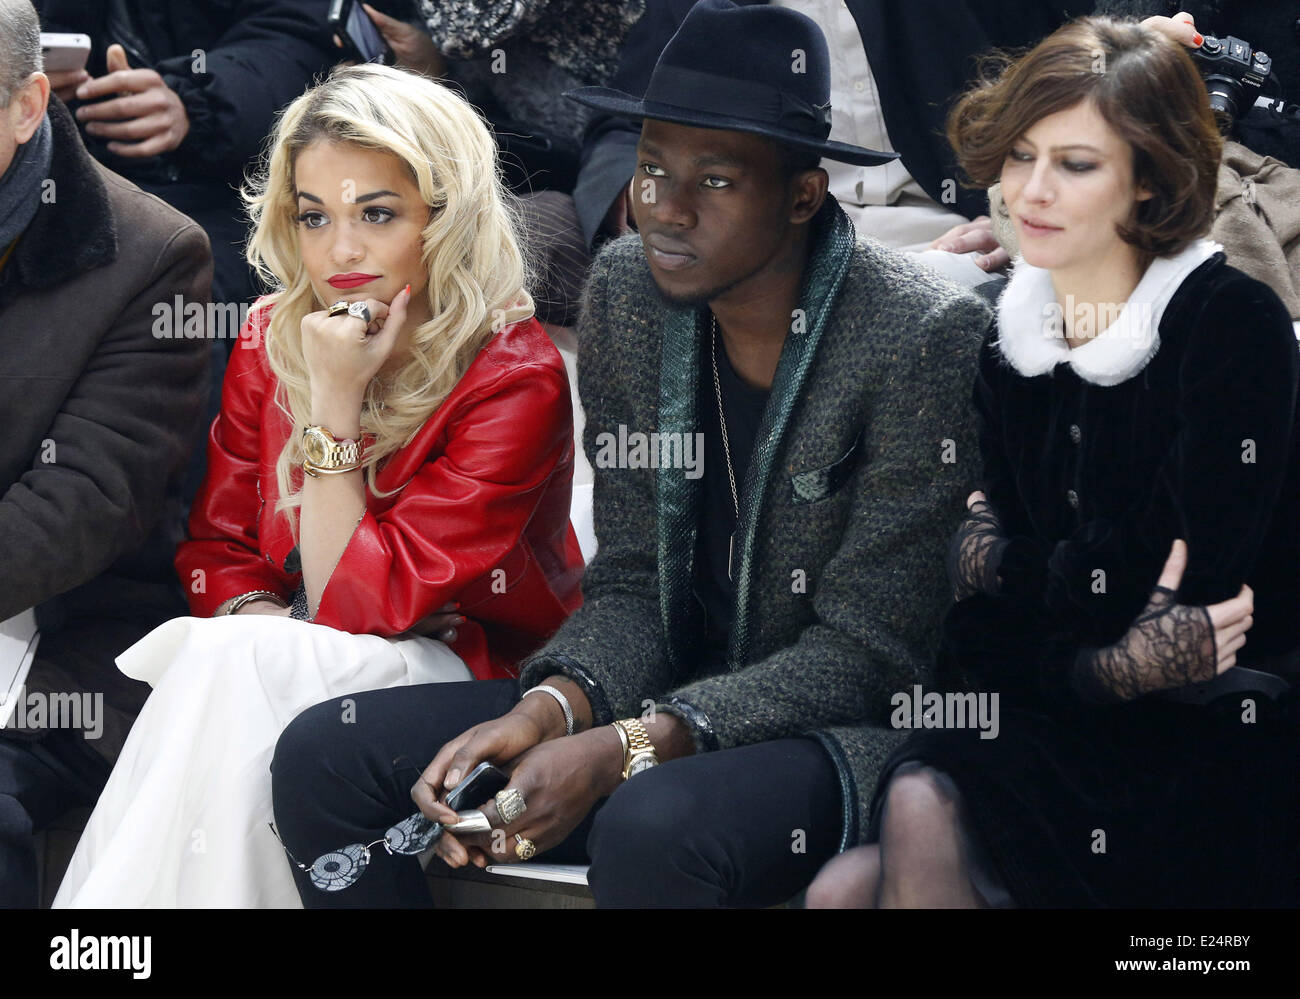 Paris Fashion Week Haute Couture Spring 2013 - Chanel - Front Row  Featuring: Rita Ora,Theophilus London,Anna Mouglalis Where: Paris, France When: 22 Jan 2013 Stock Photo